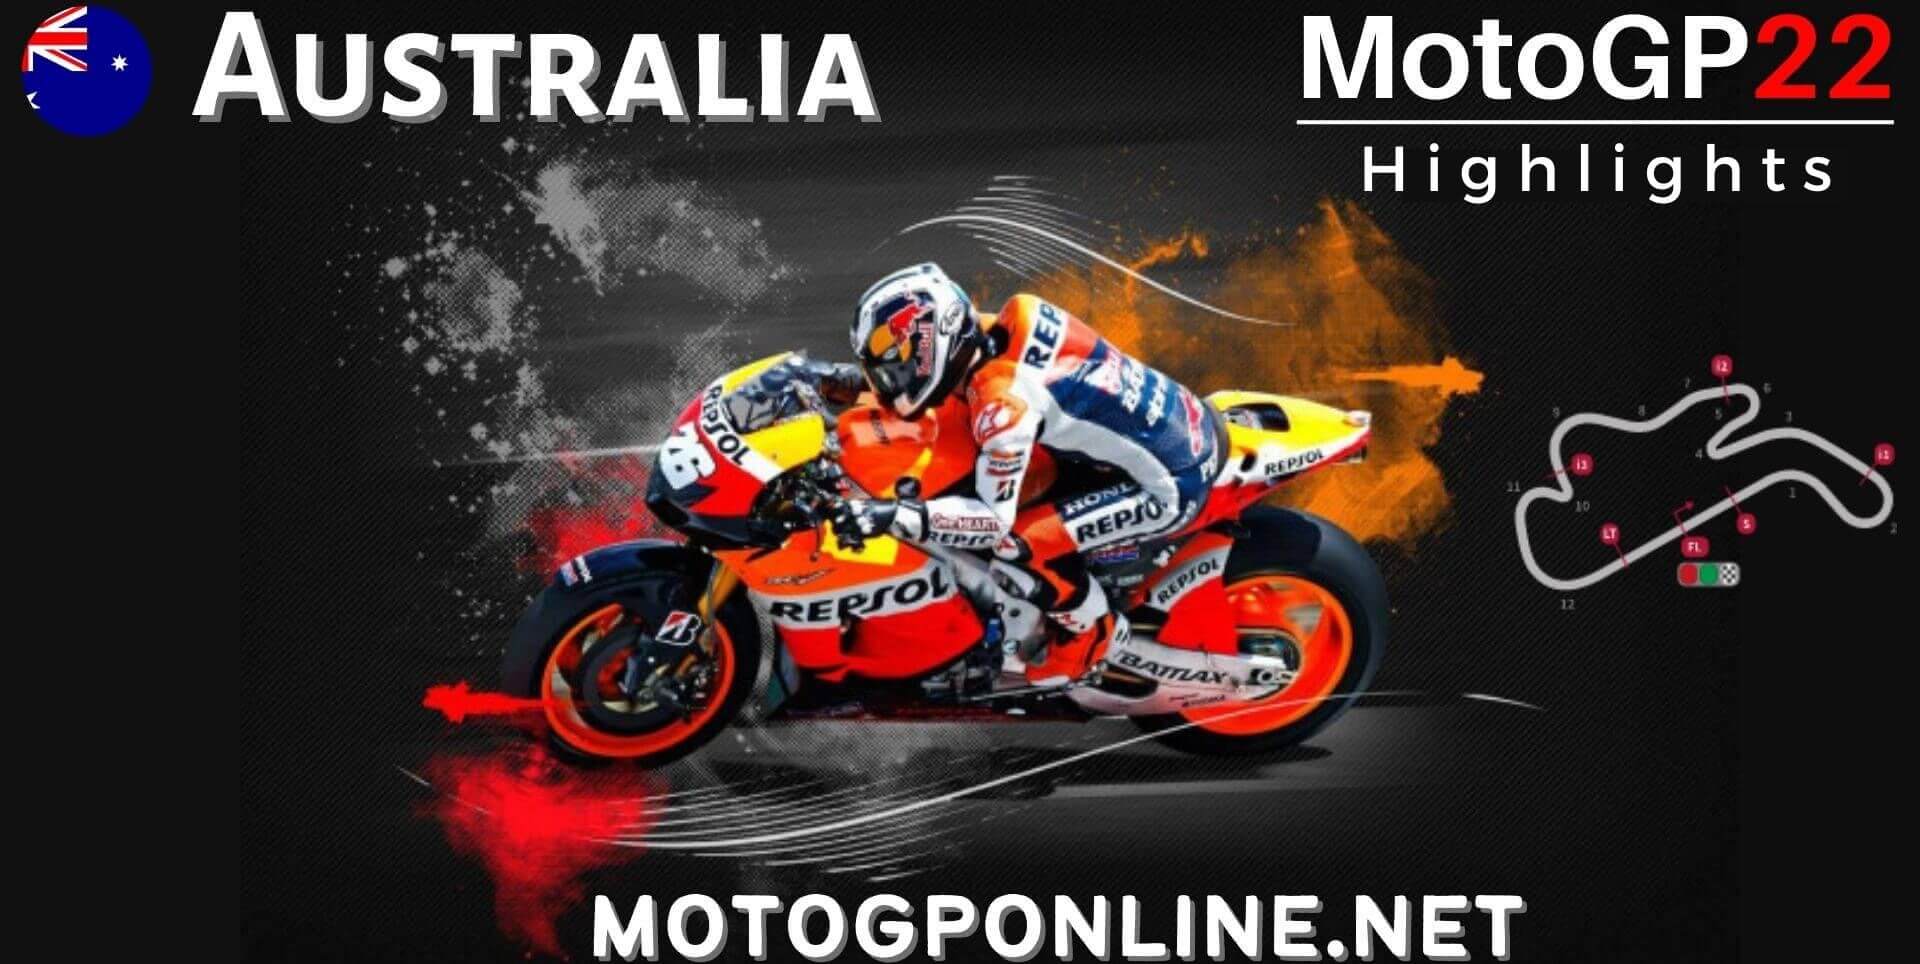 Australian MotoGP Grand Prix Highlights 2022